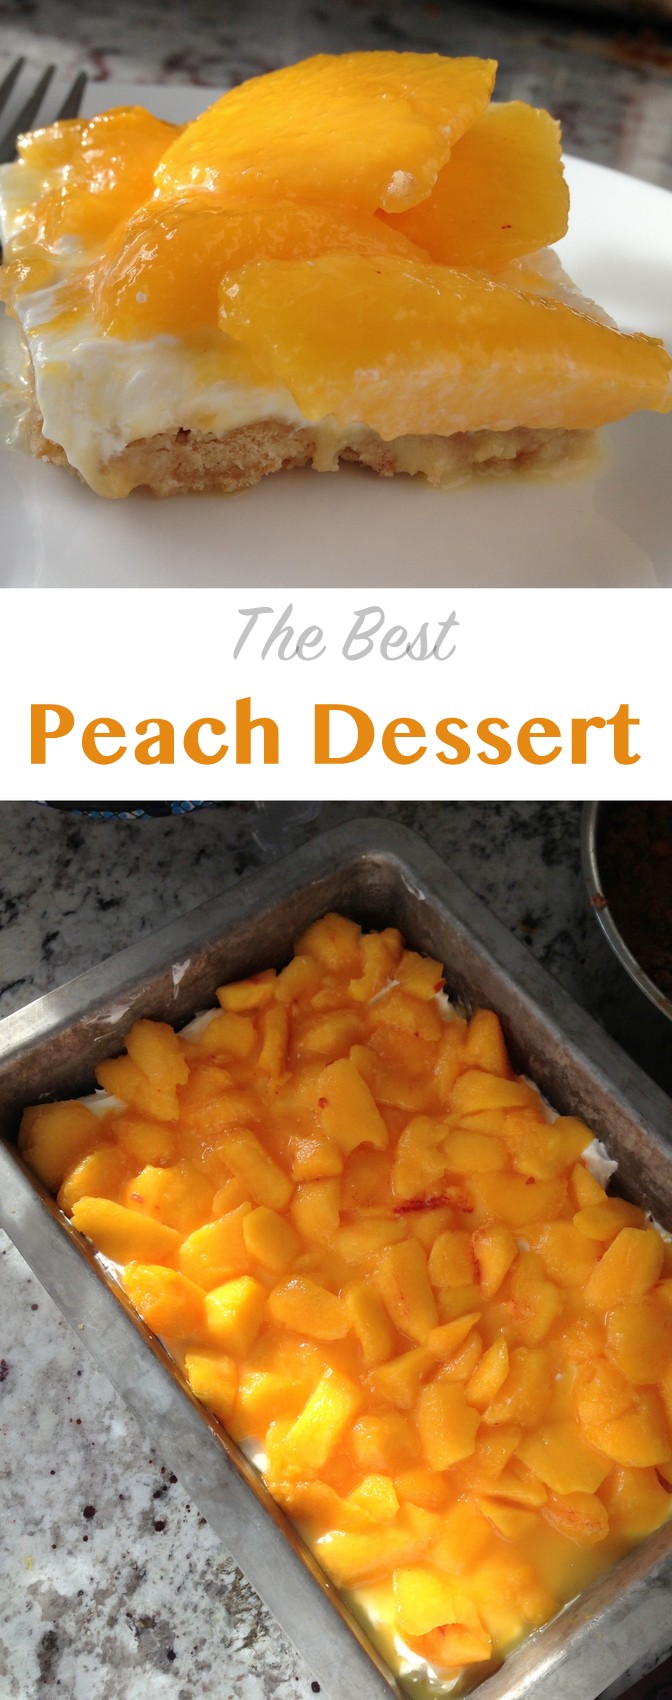 http://www.nobiggie.net/wp-content/uploads/2013/08/the-best-peach-dessert-perfect-for-peach-season-get-the-recipe-on-NoBiggie.net_.jpg